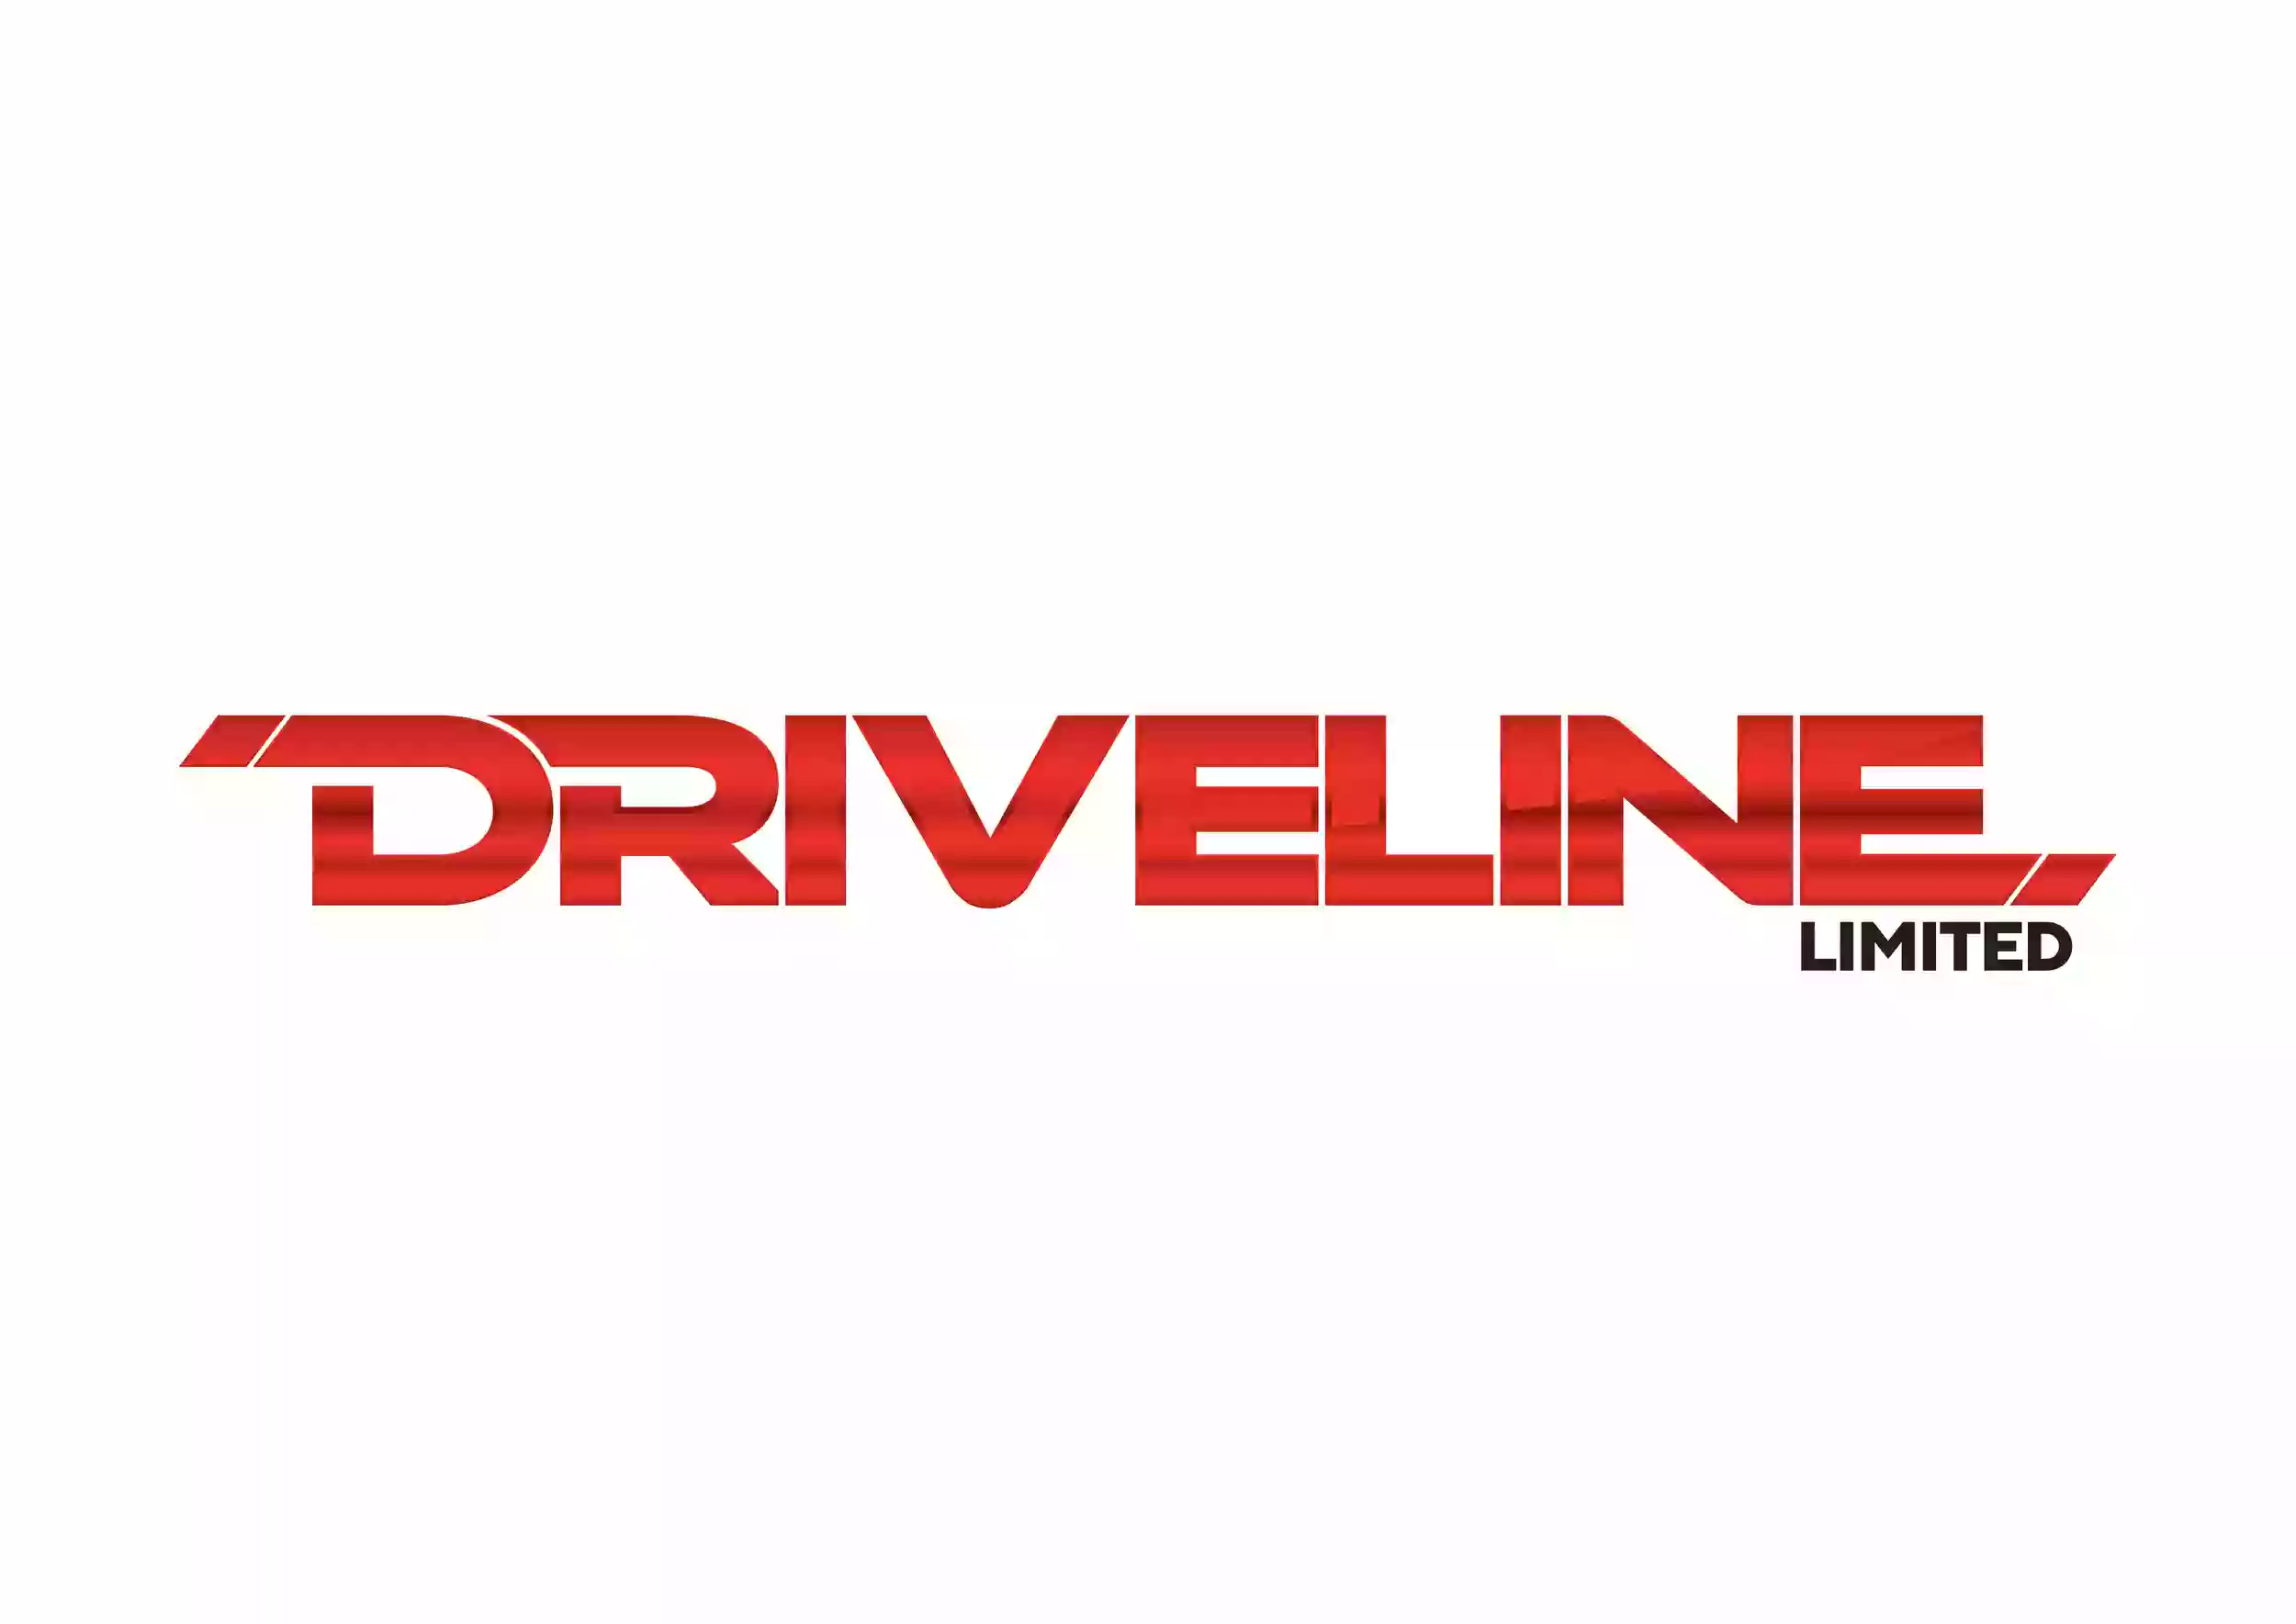 Driveline Ltd